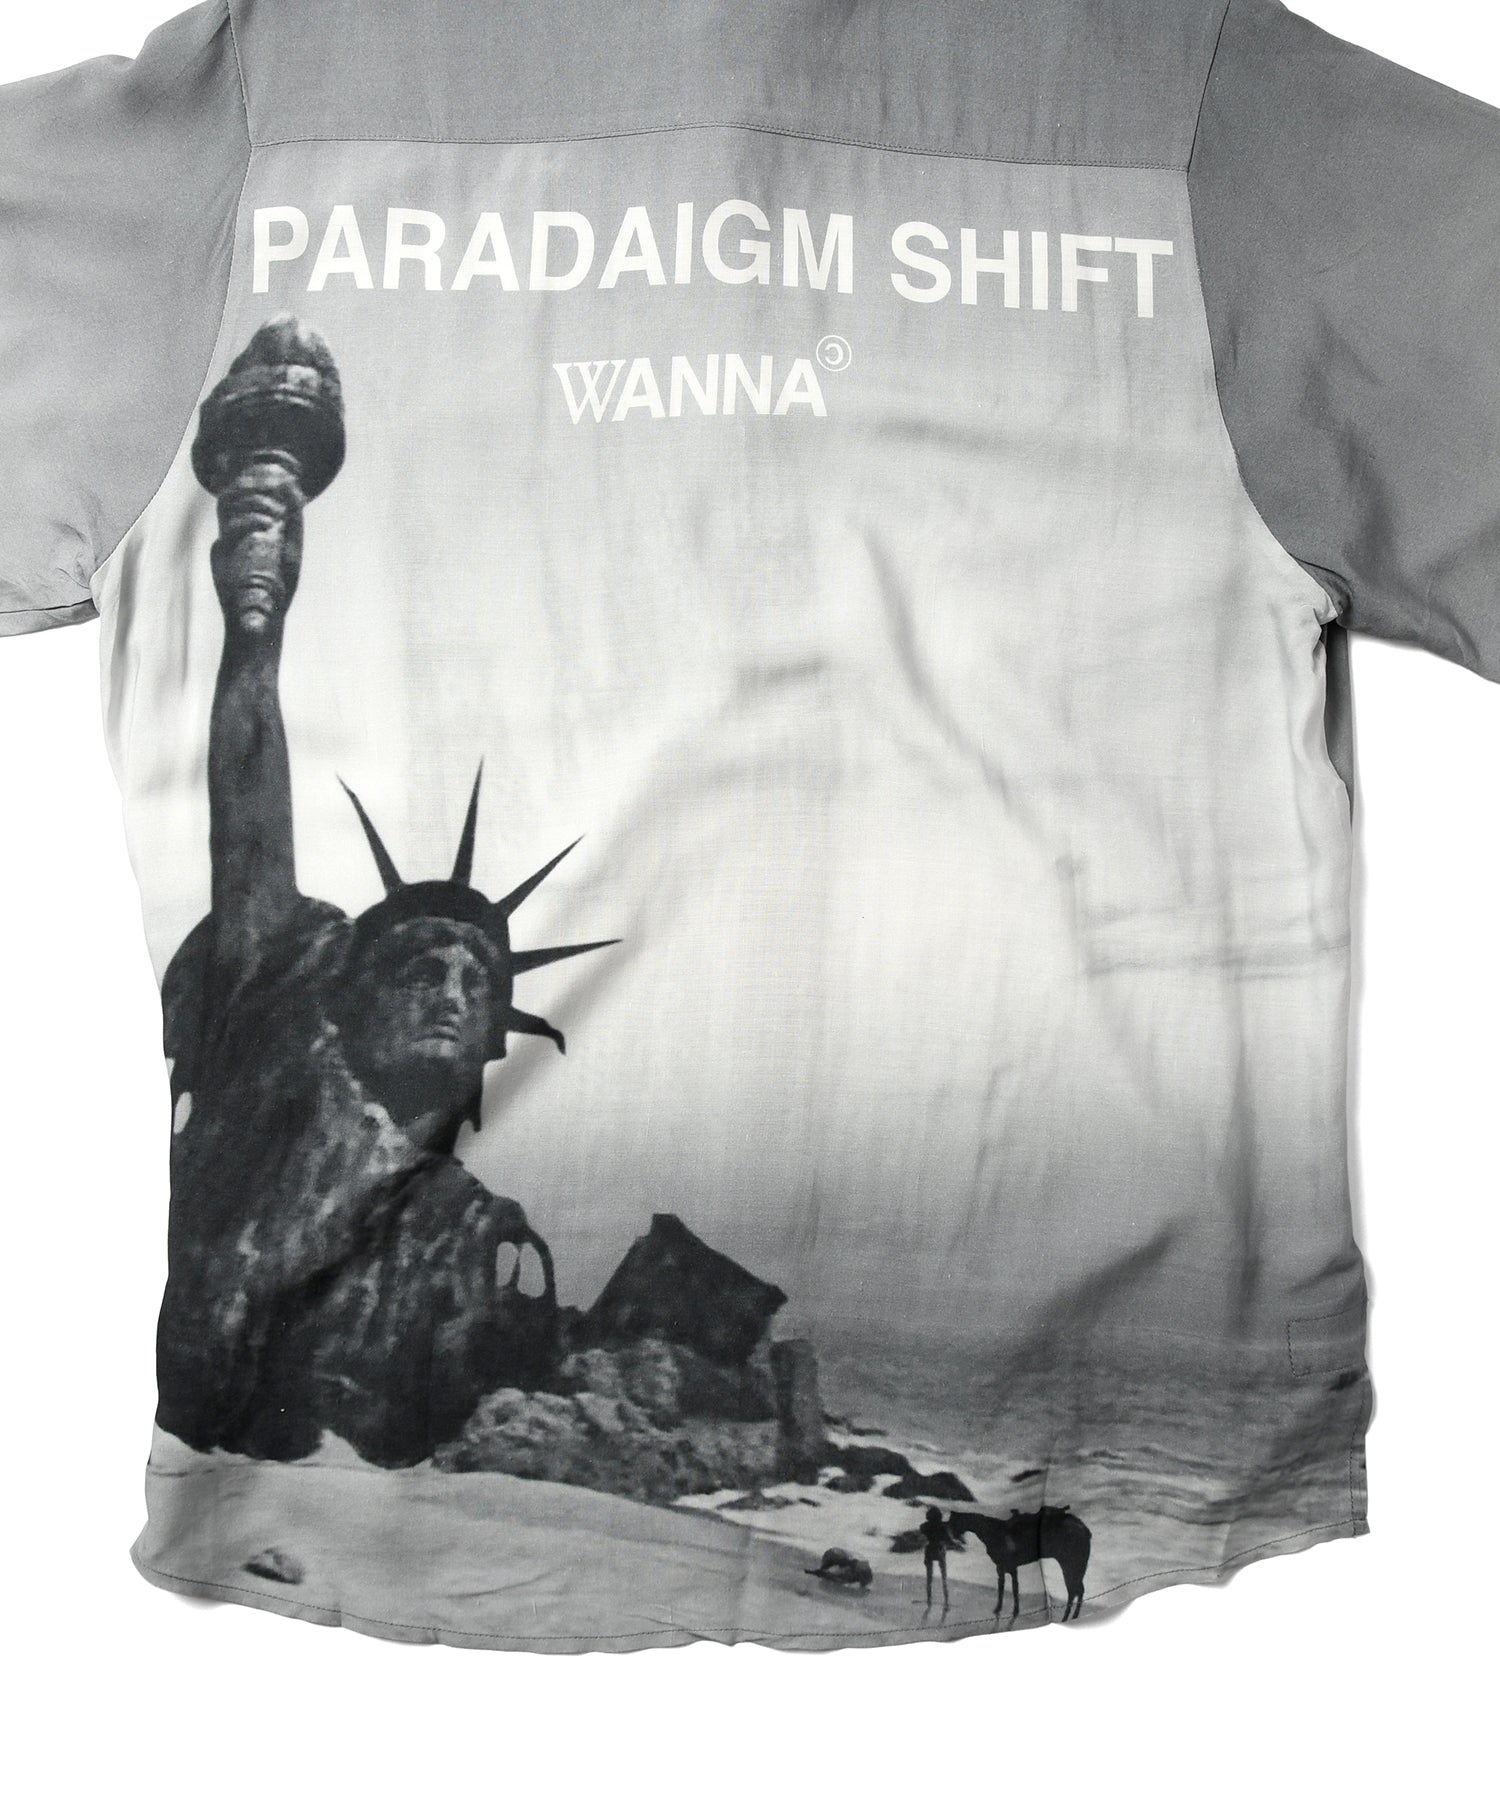 Wanna Paradaigm Shift Button Up Shirt